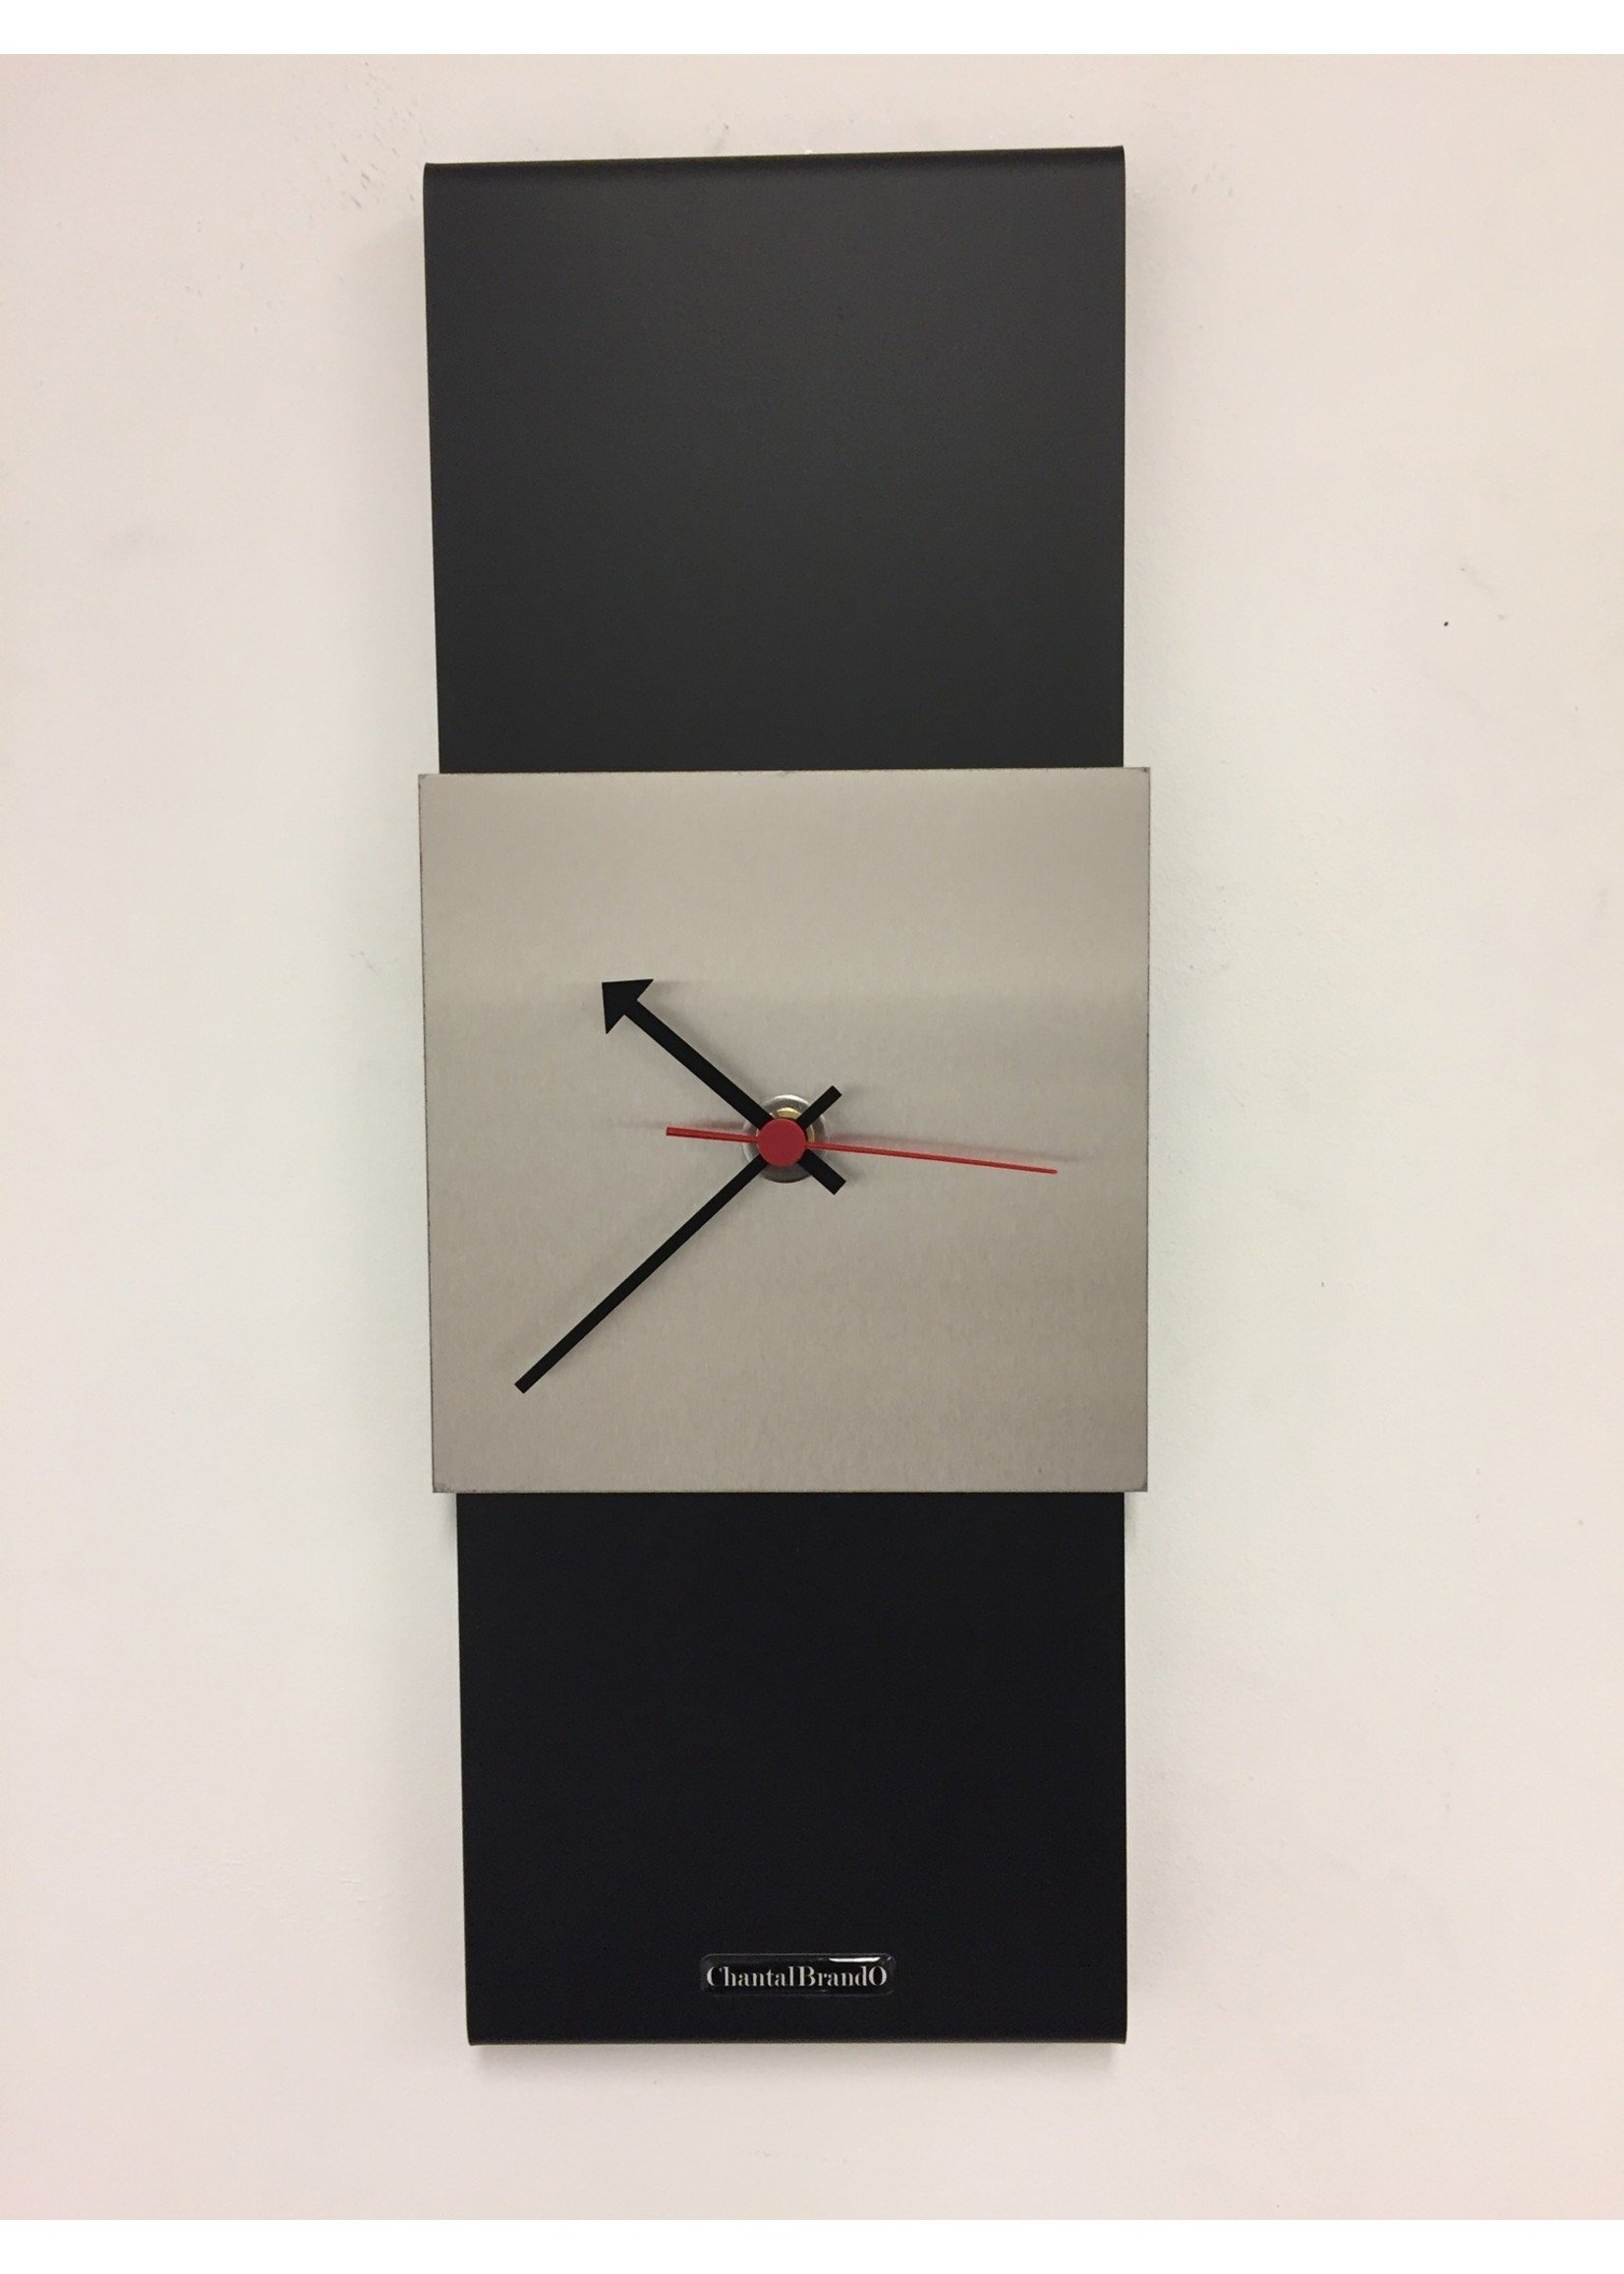 Klokkendiscounter BeoXL - Wanduhr Black-Line Silver Square RED Pointer Modern Design Edelstahl